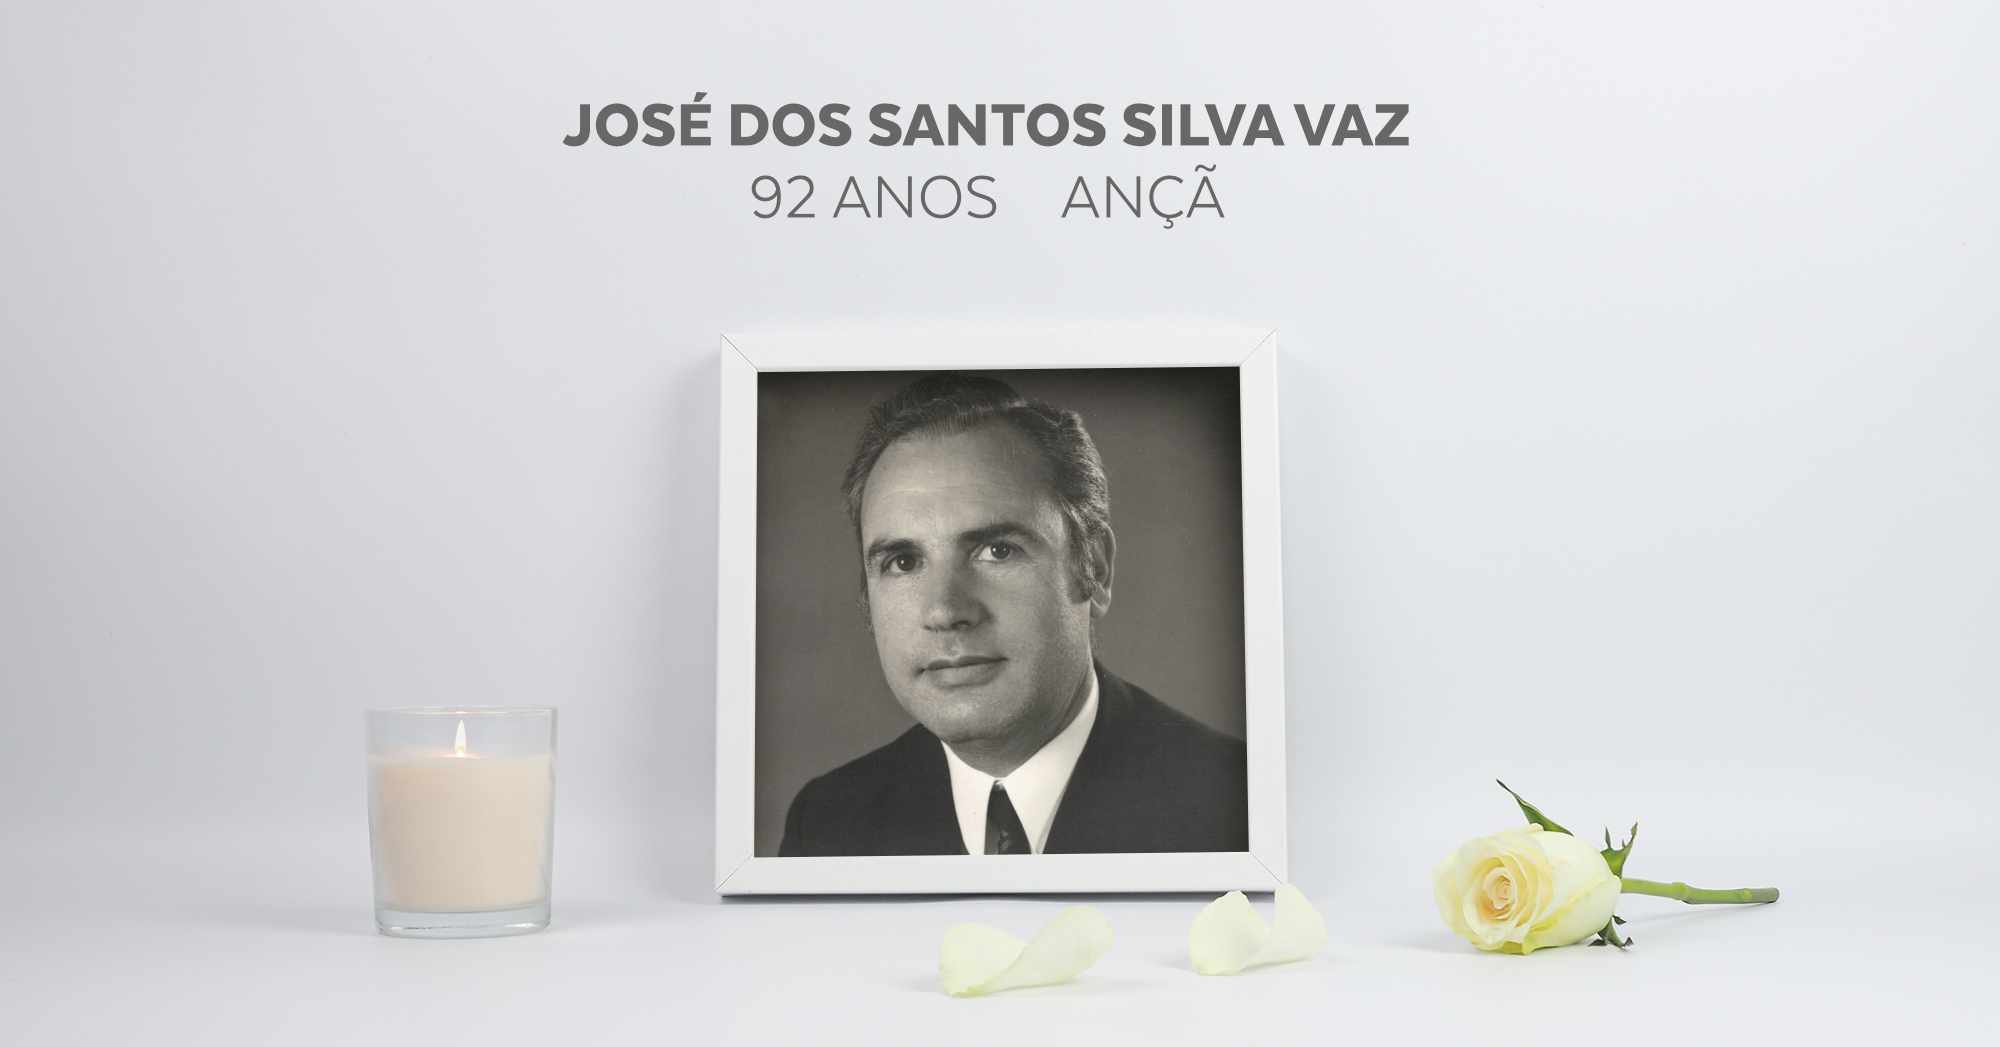 José dos Santos Silva Vaz